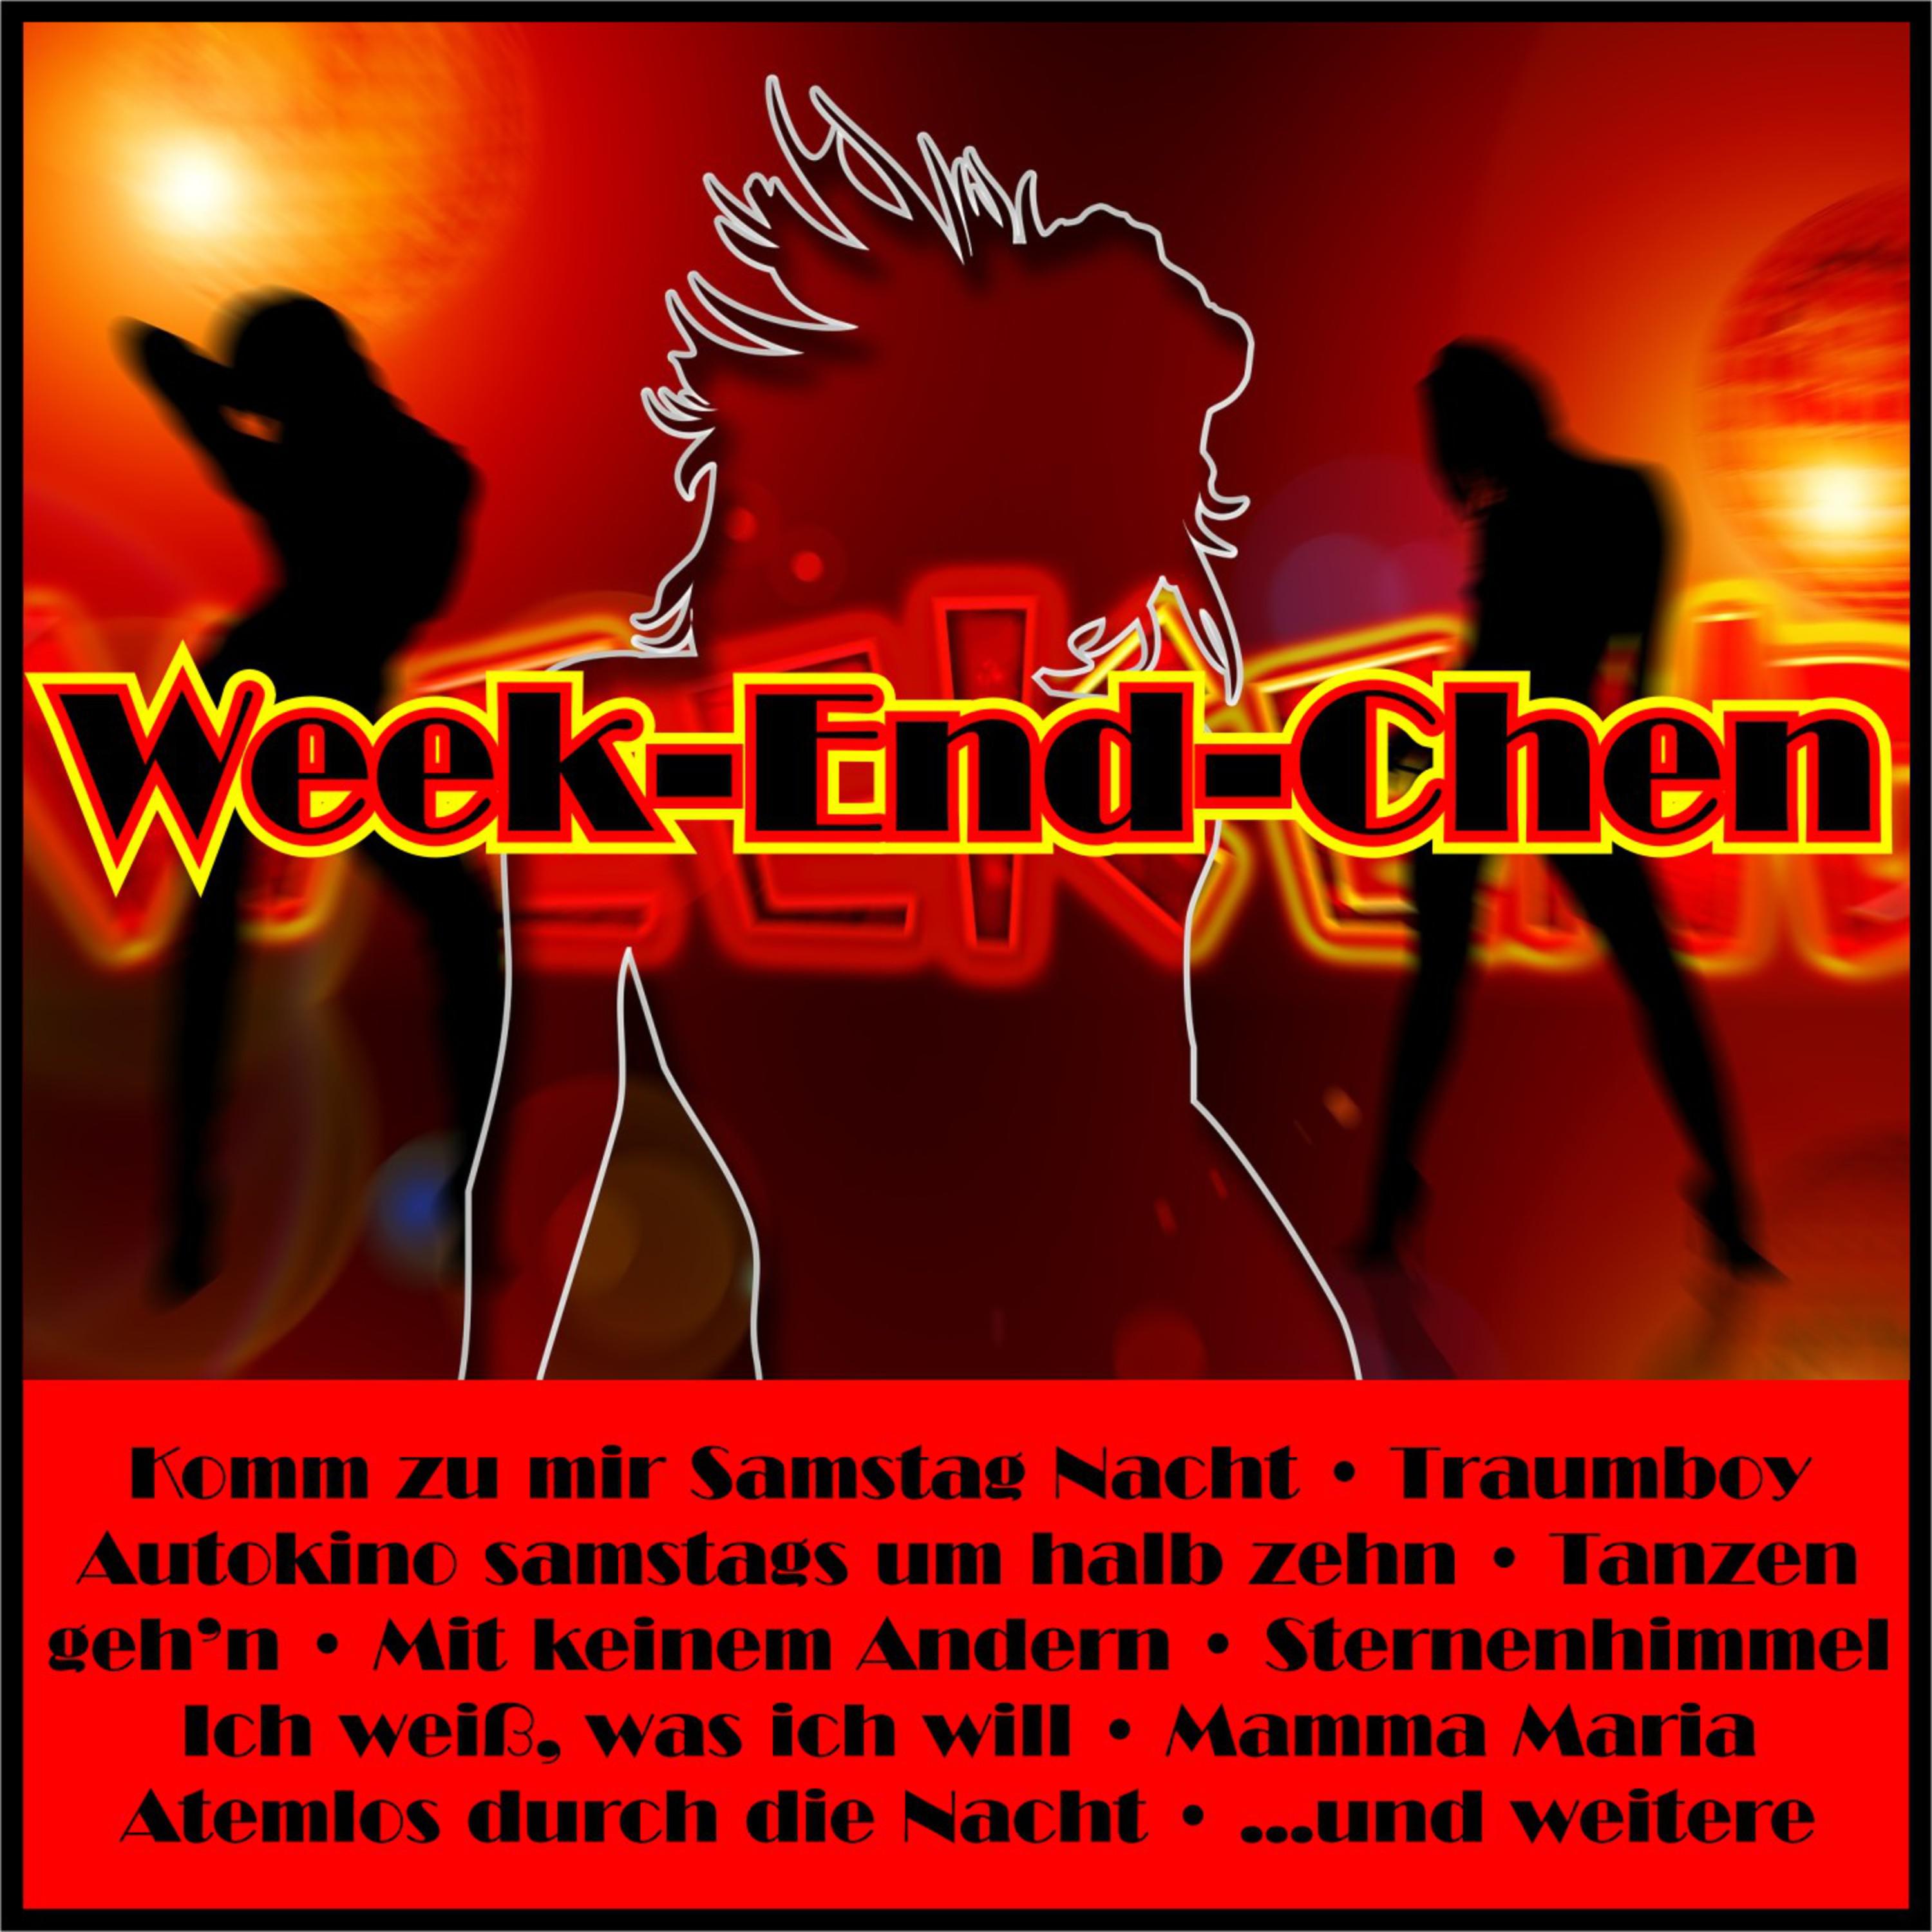 Week-End-Chen